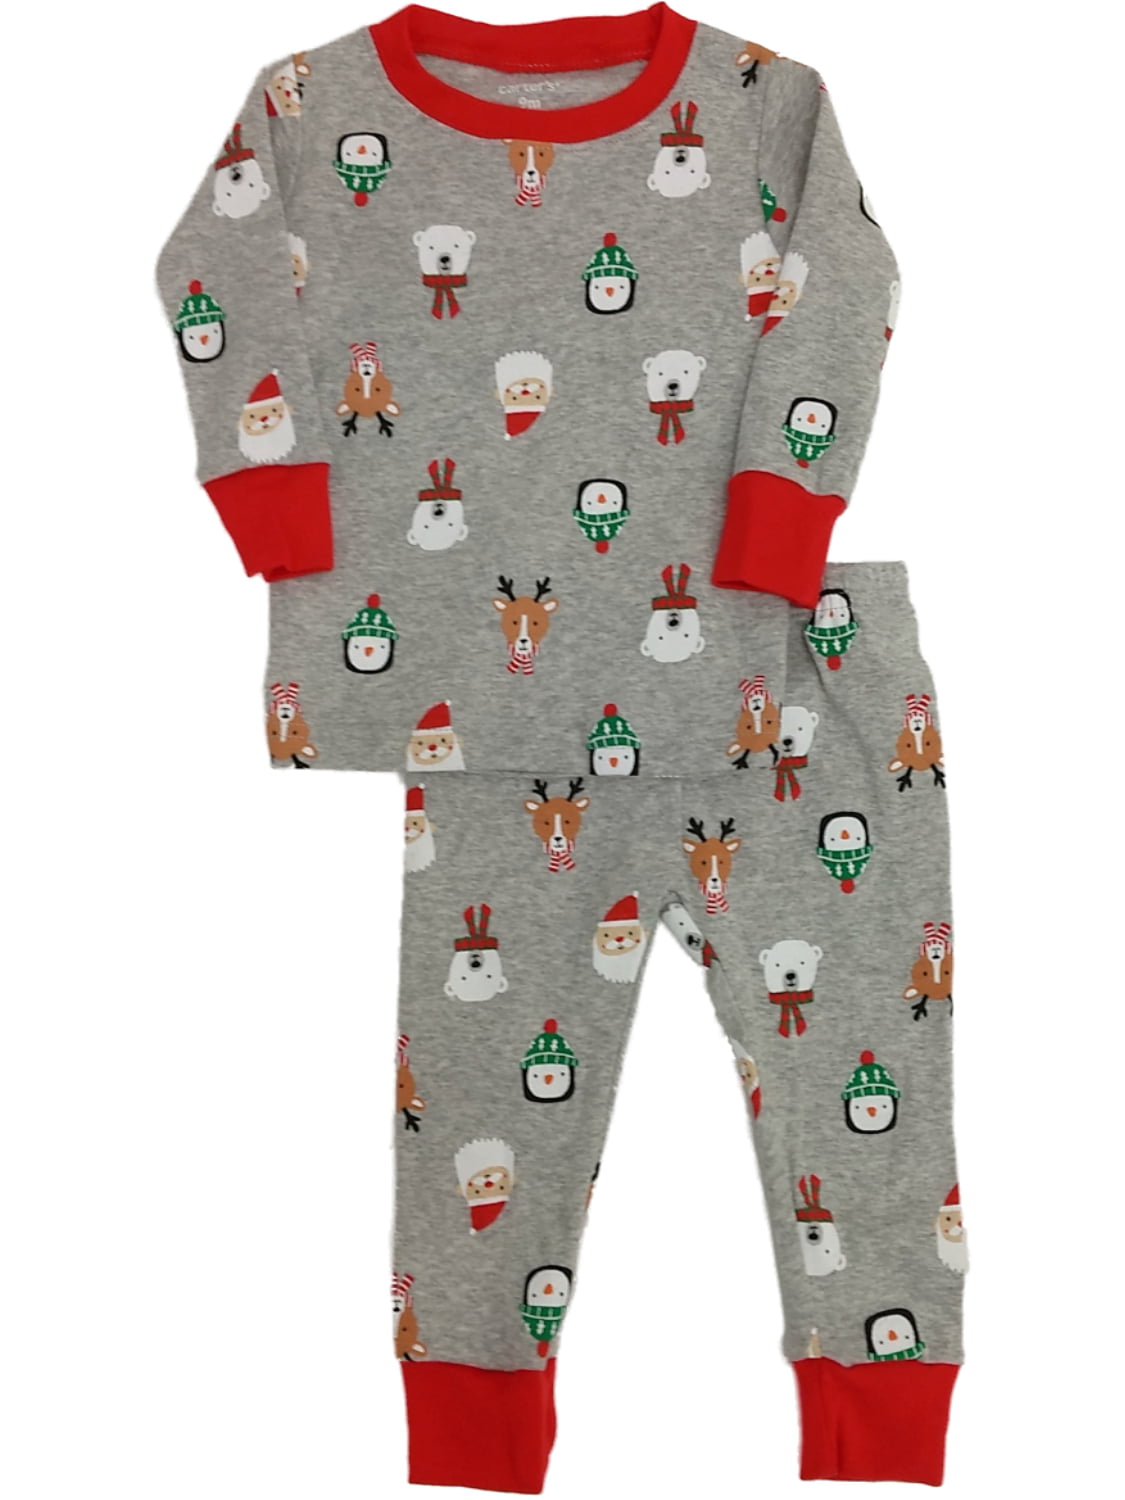 Carters Infant Boys Gray Cotton Santa Polar Bear Christmas Holiday Pajamas